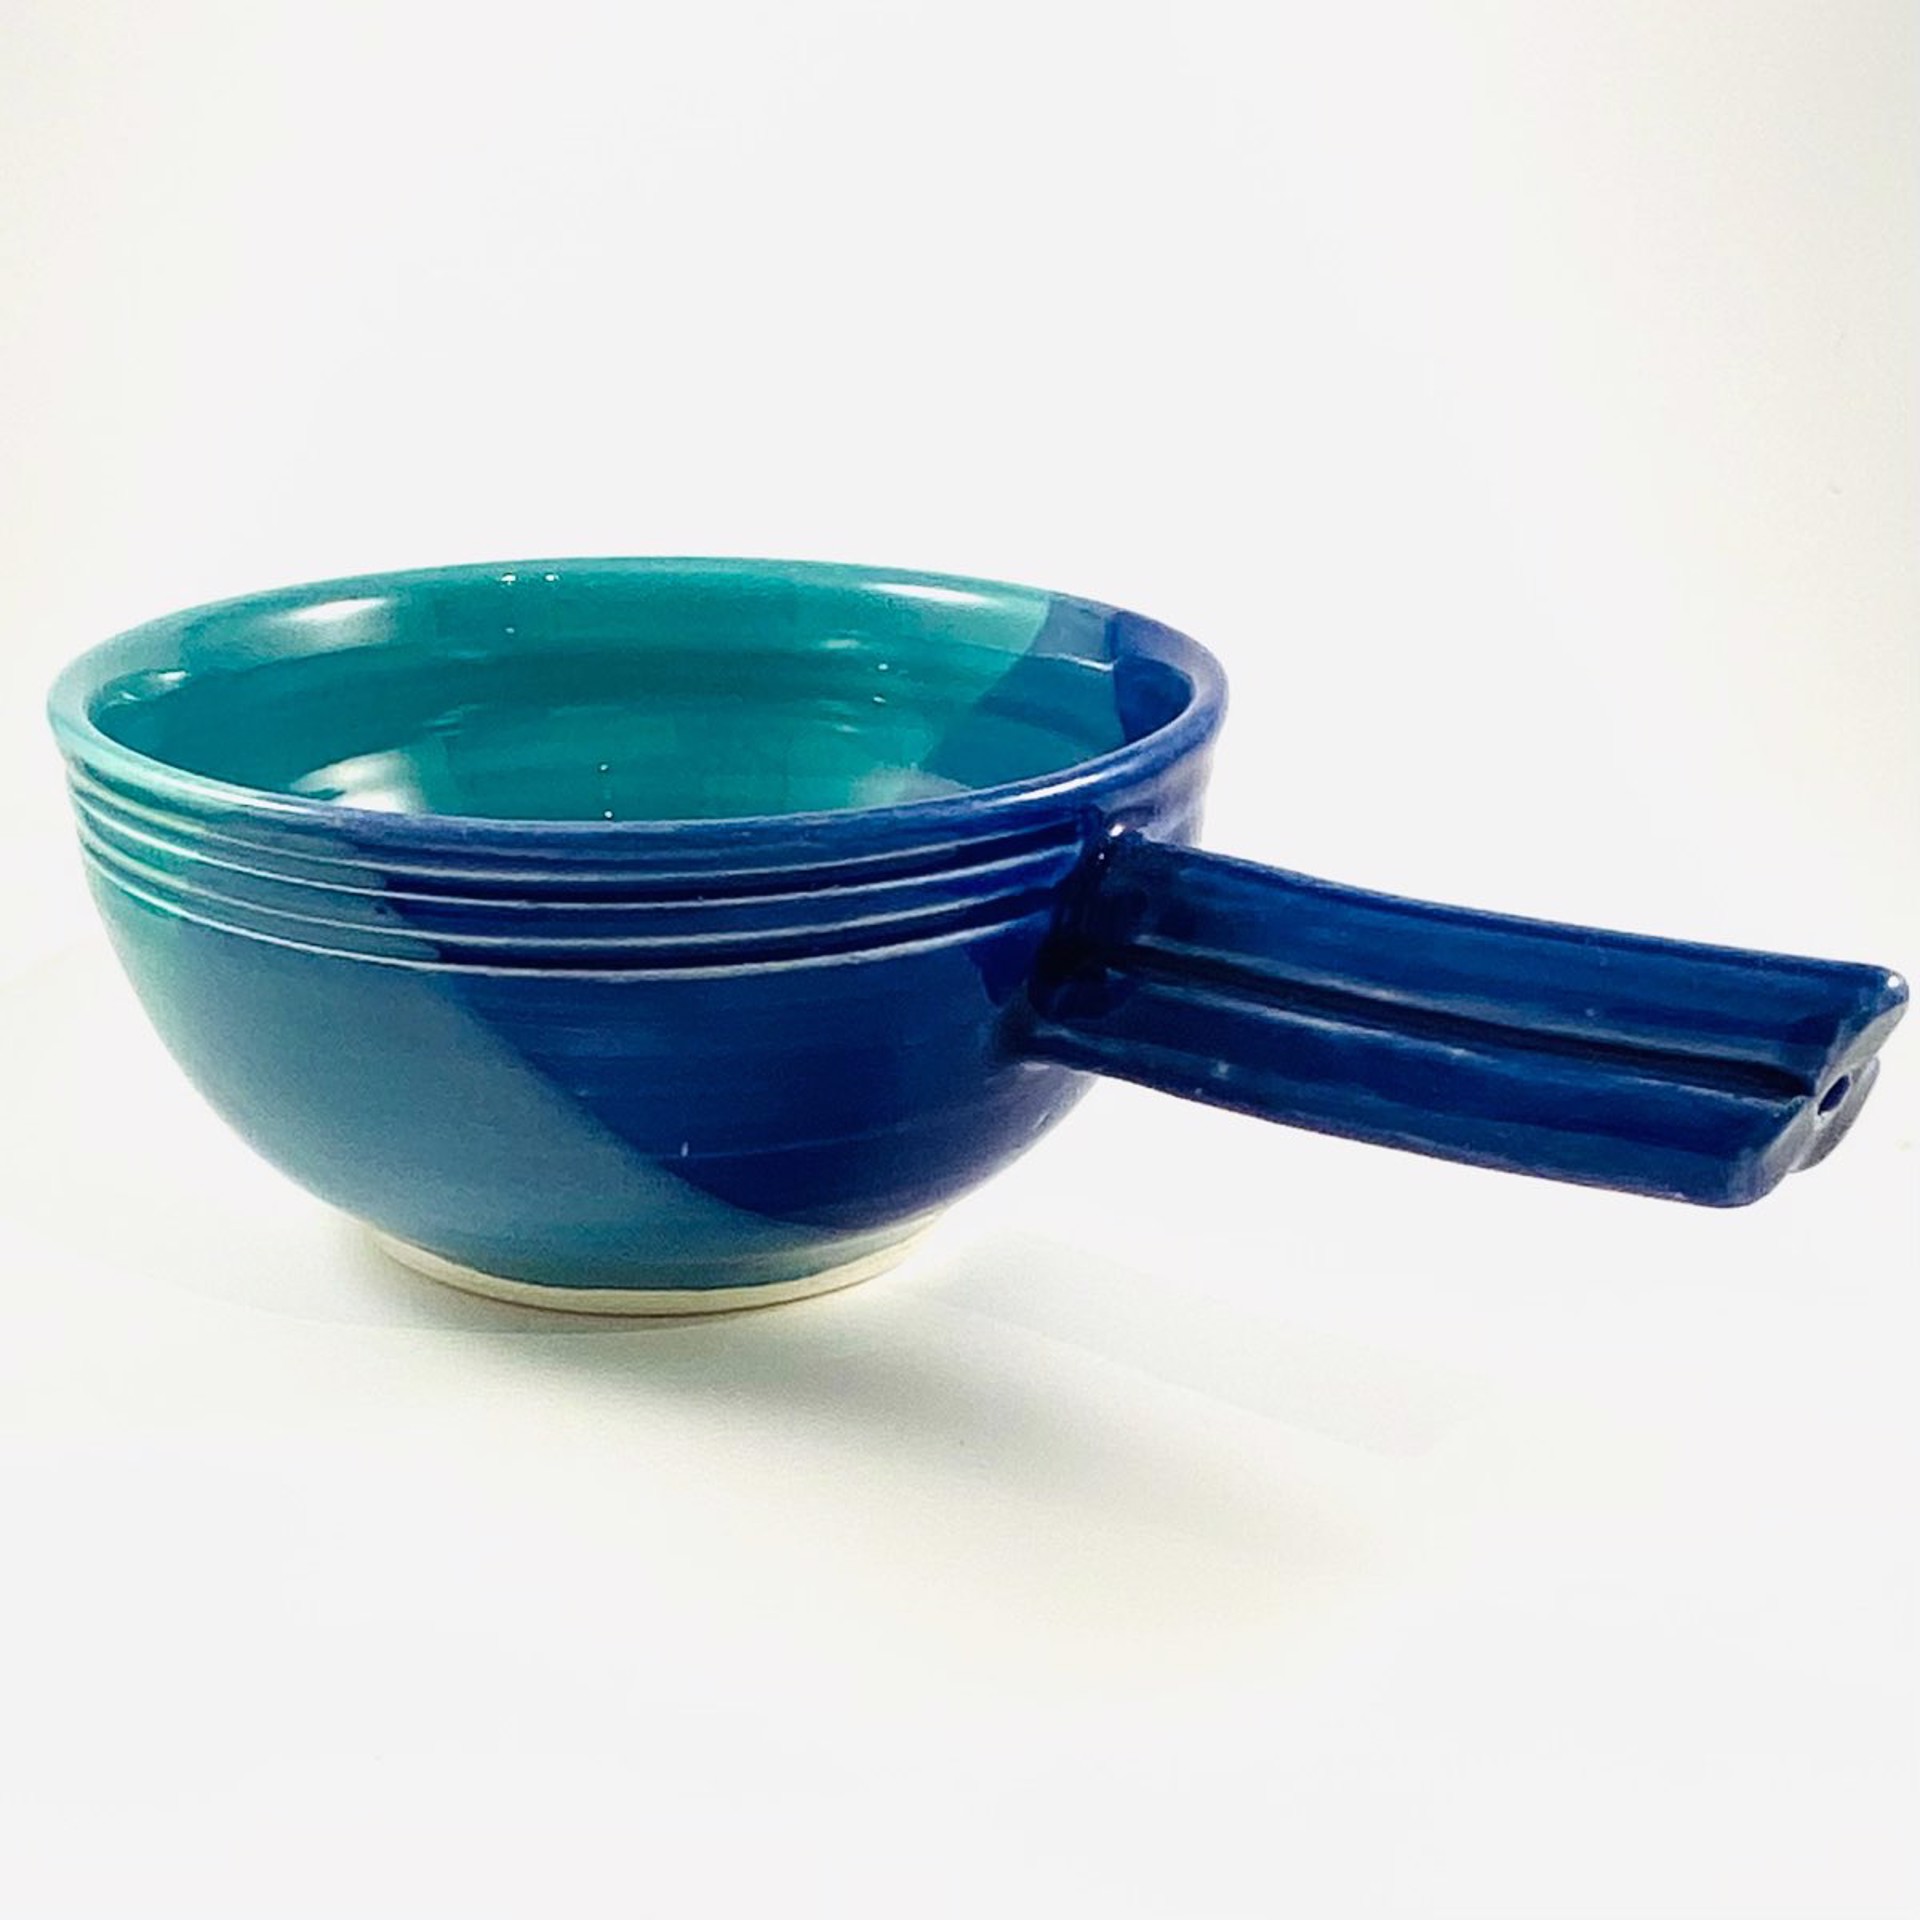 ILO21 Soup Bowl with Handle by Ilene Olanoff